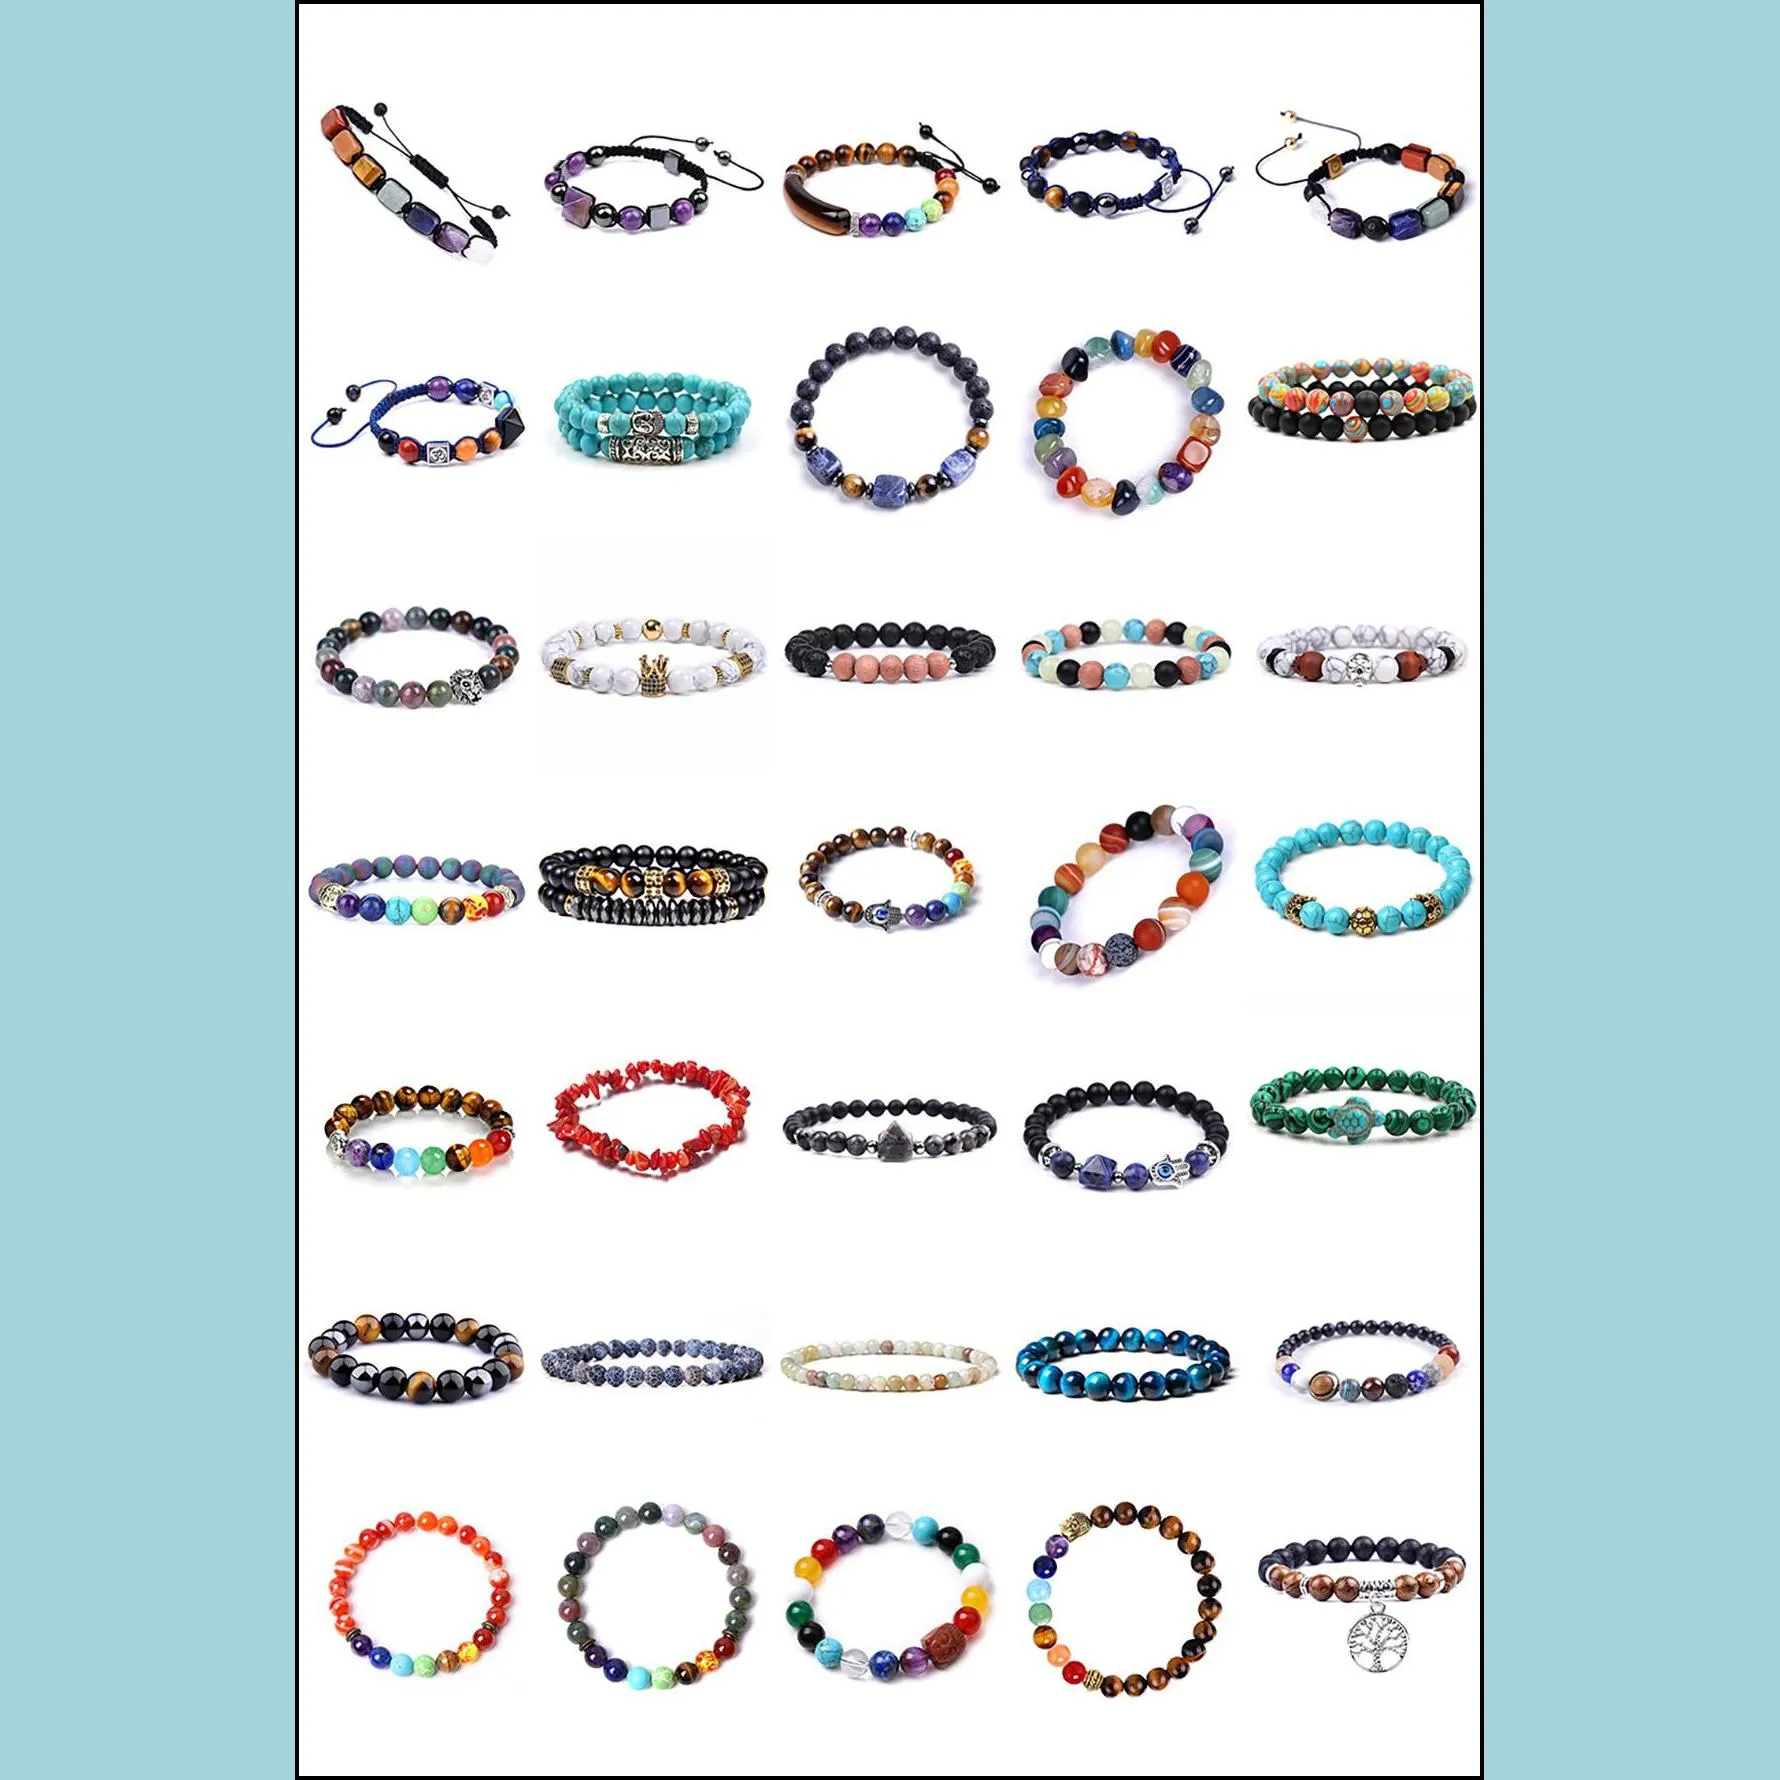 natural stone bracelet tiger eye agate gemstone bead strands women mens bracelets bangle cuff fine fashion jewelry will and sandy